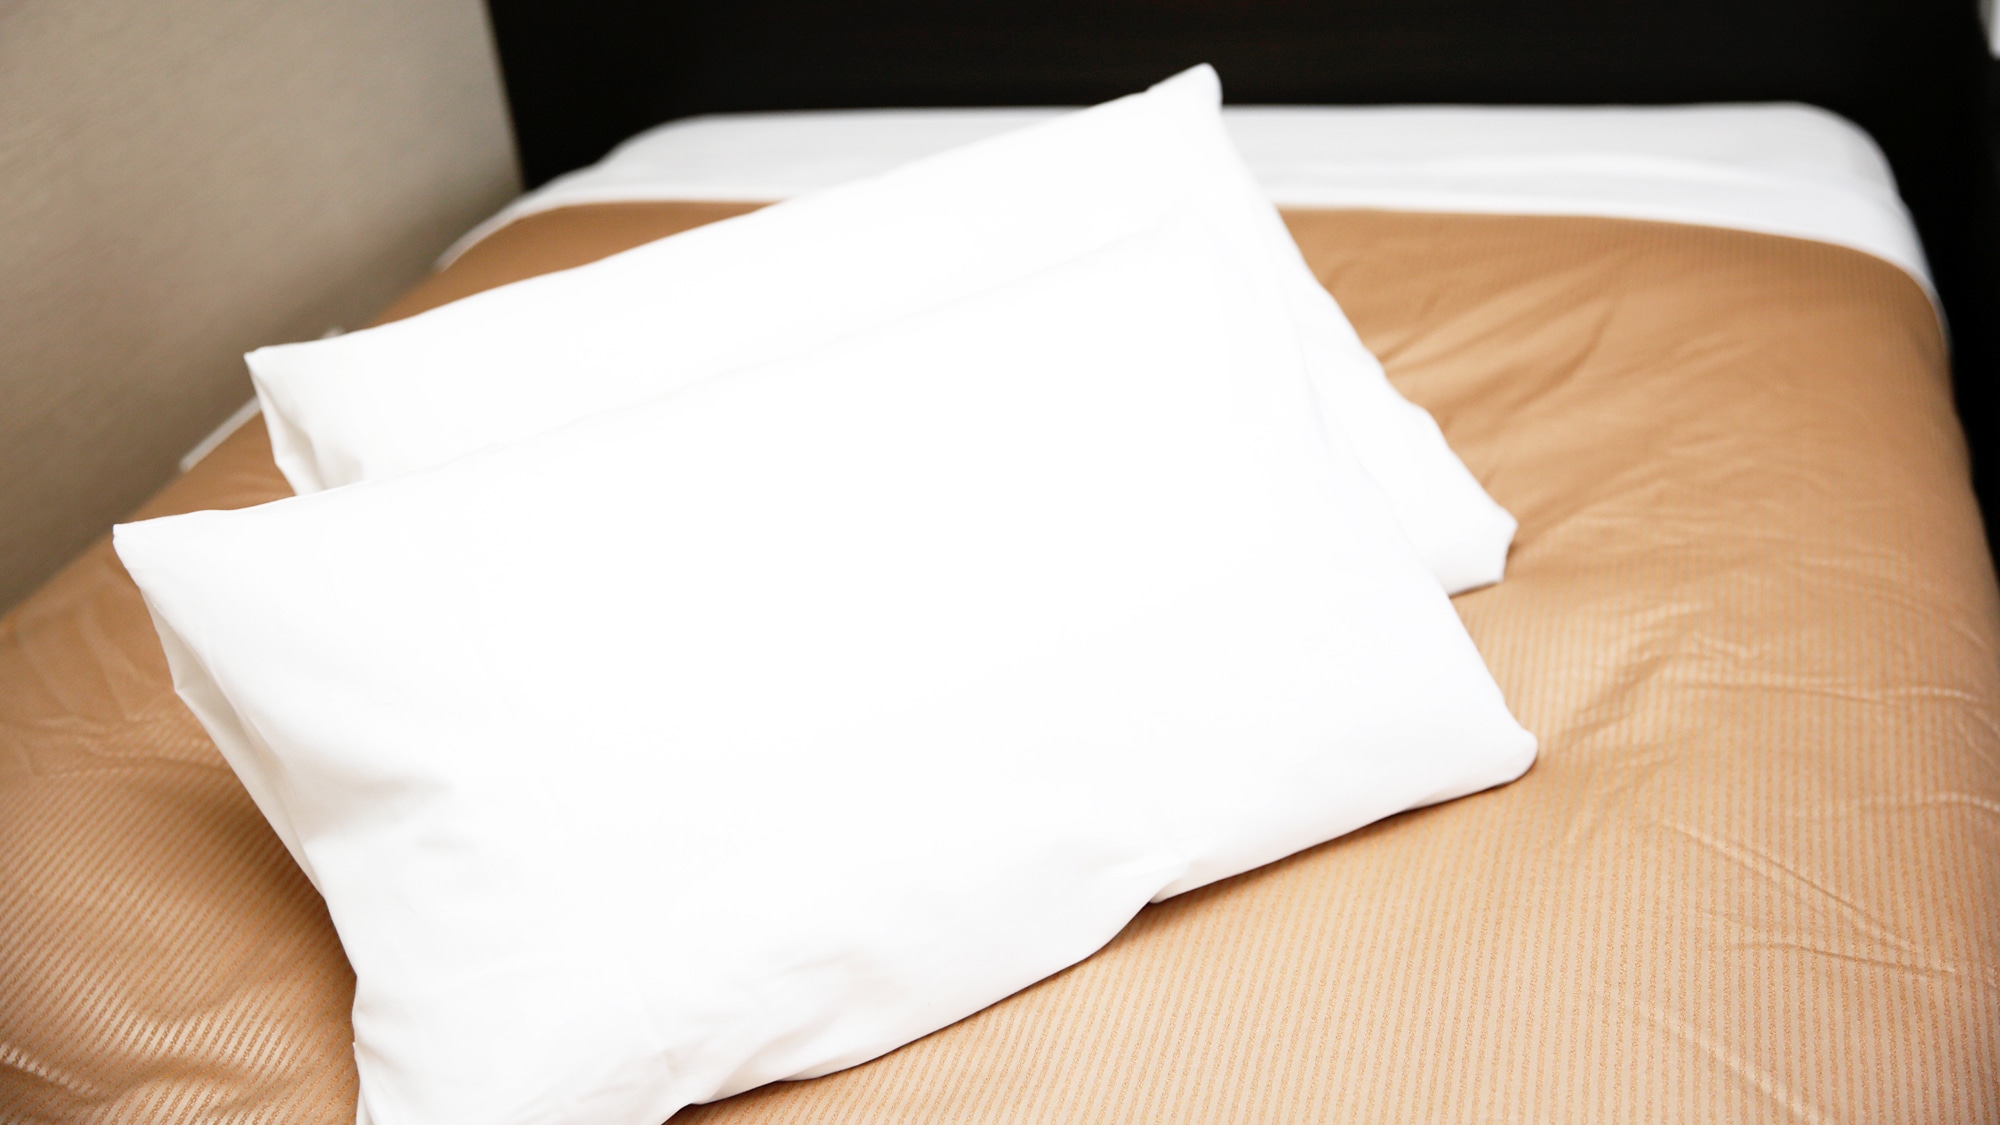 Tempat tidur dibuat oleh Nihon Bed Co., Ltd. Bantal adalah perlindungan